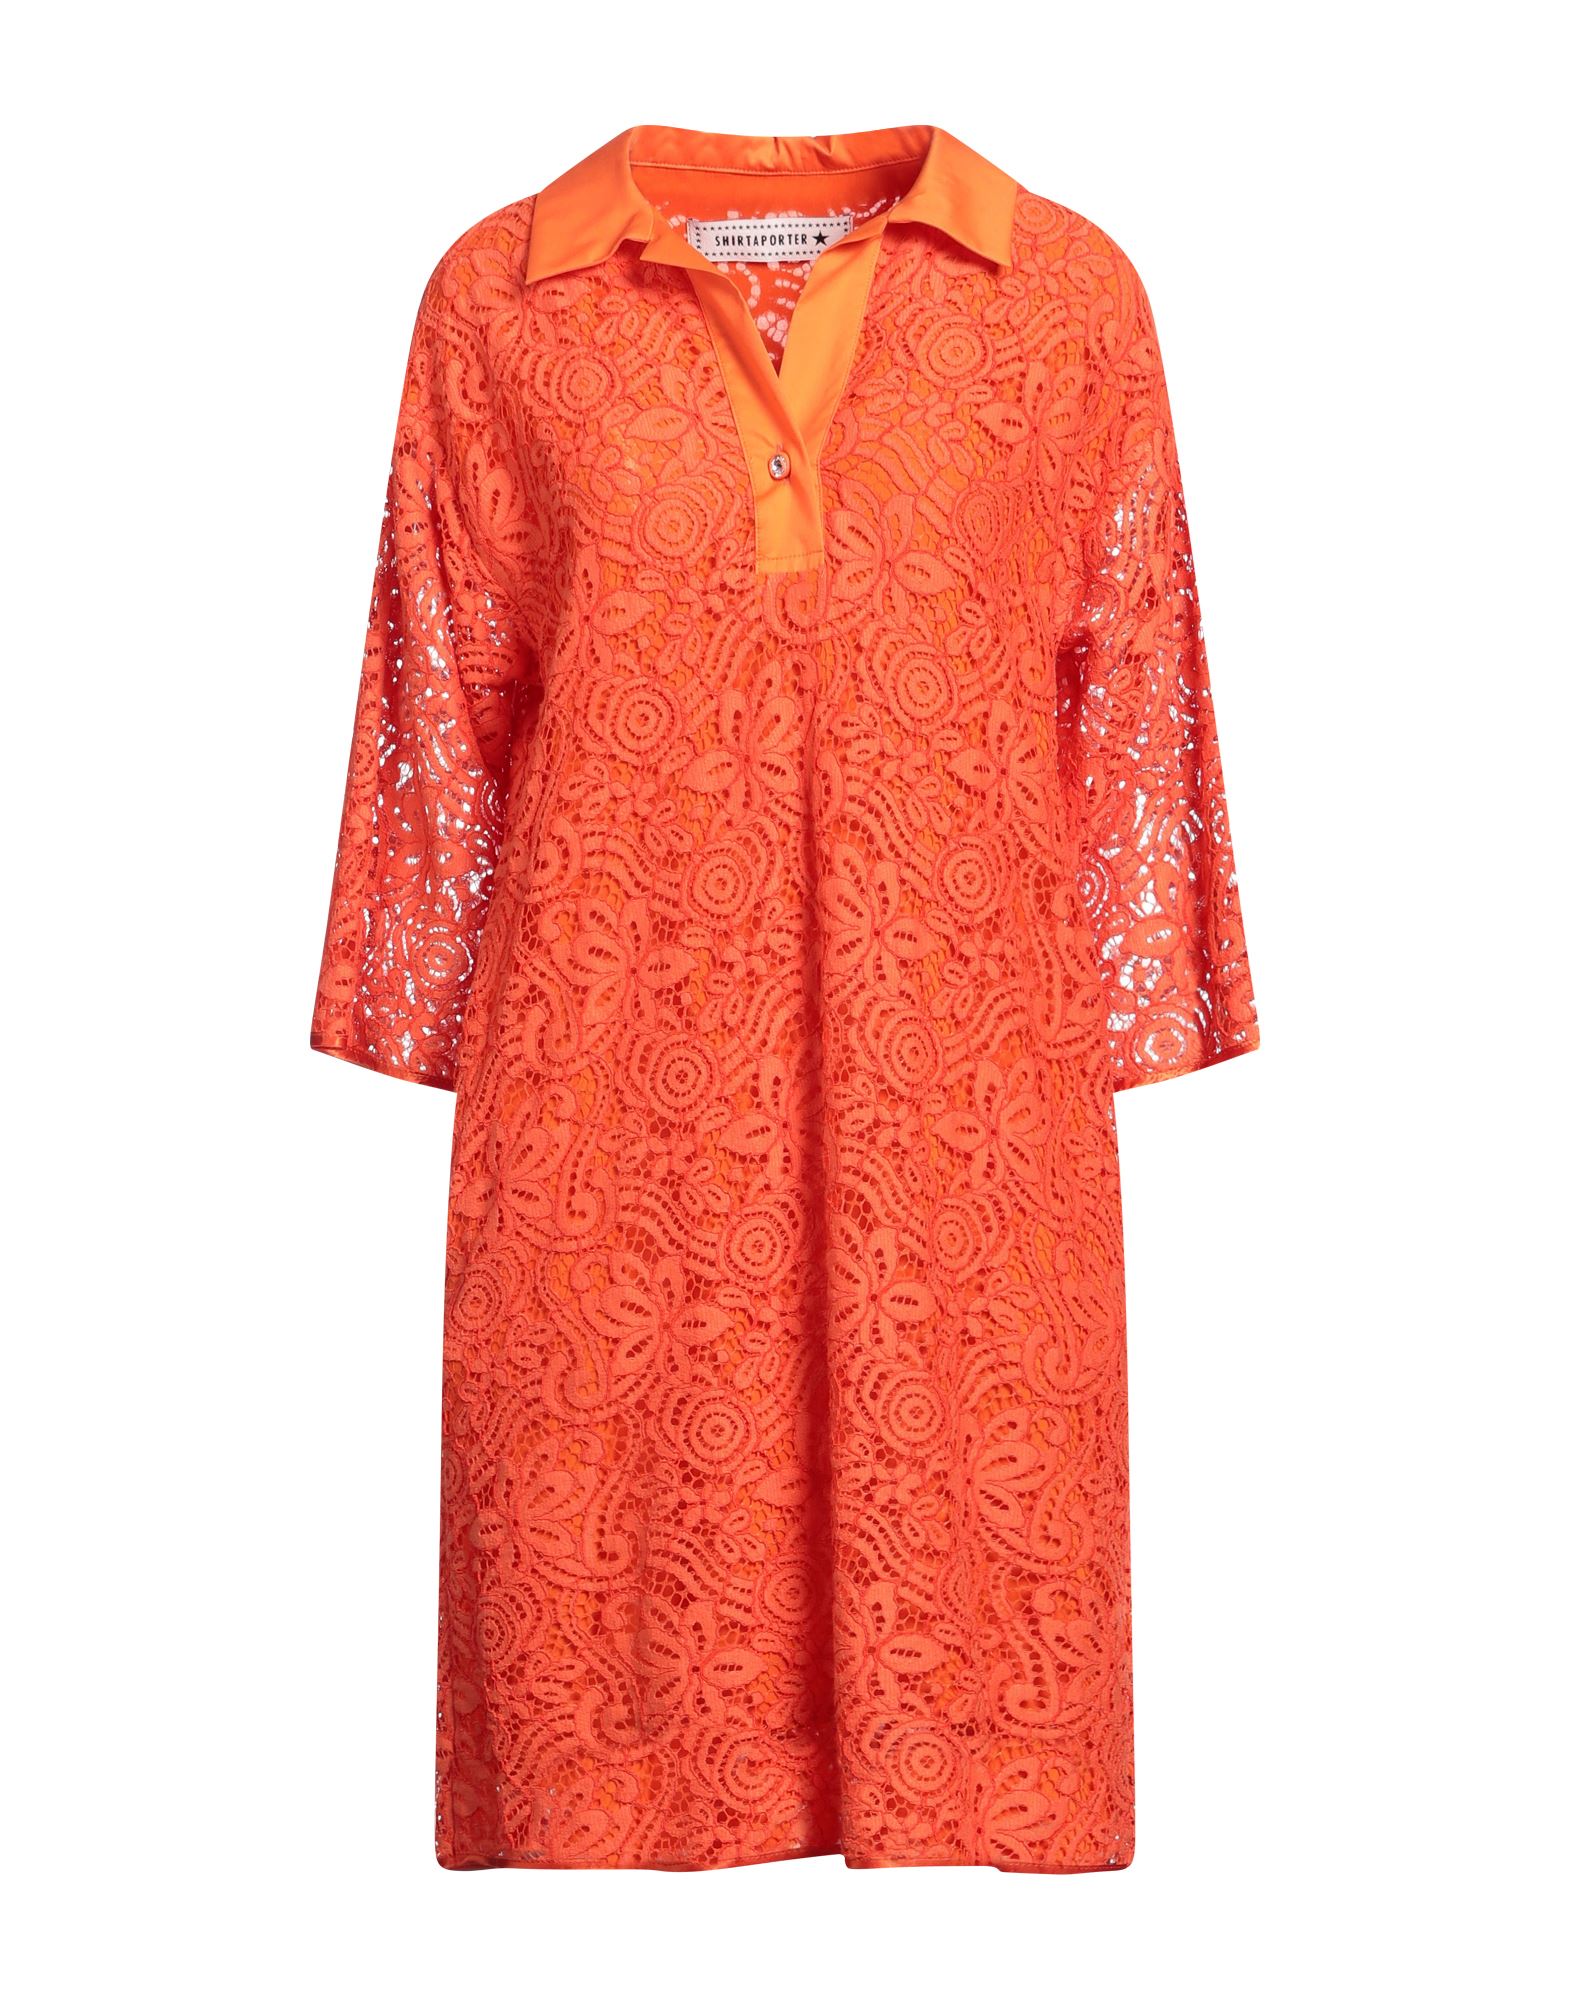 SHIRTAPORTER Mini-kleid Damen Orange von SHIRTAPORTER